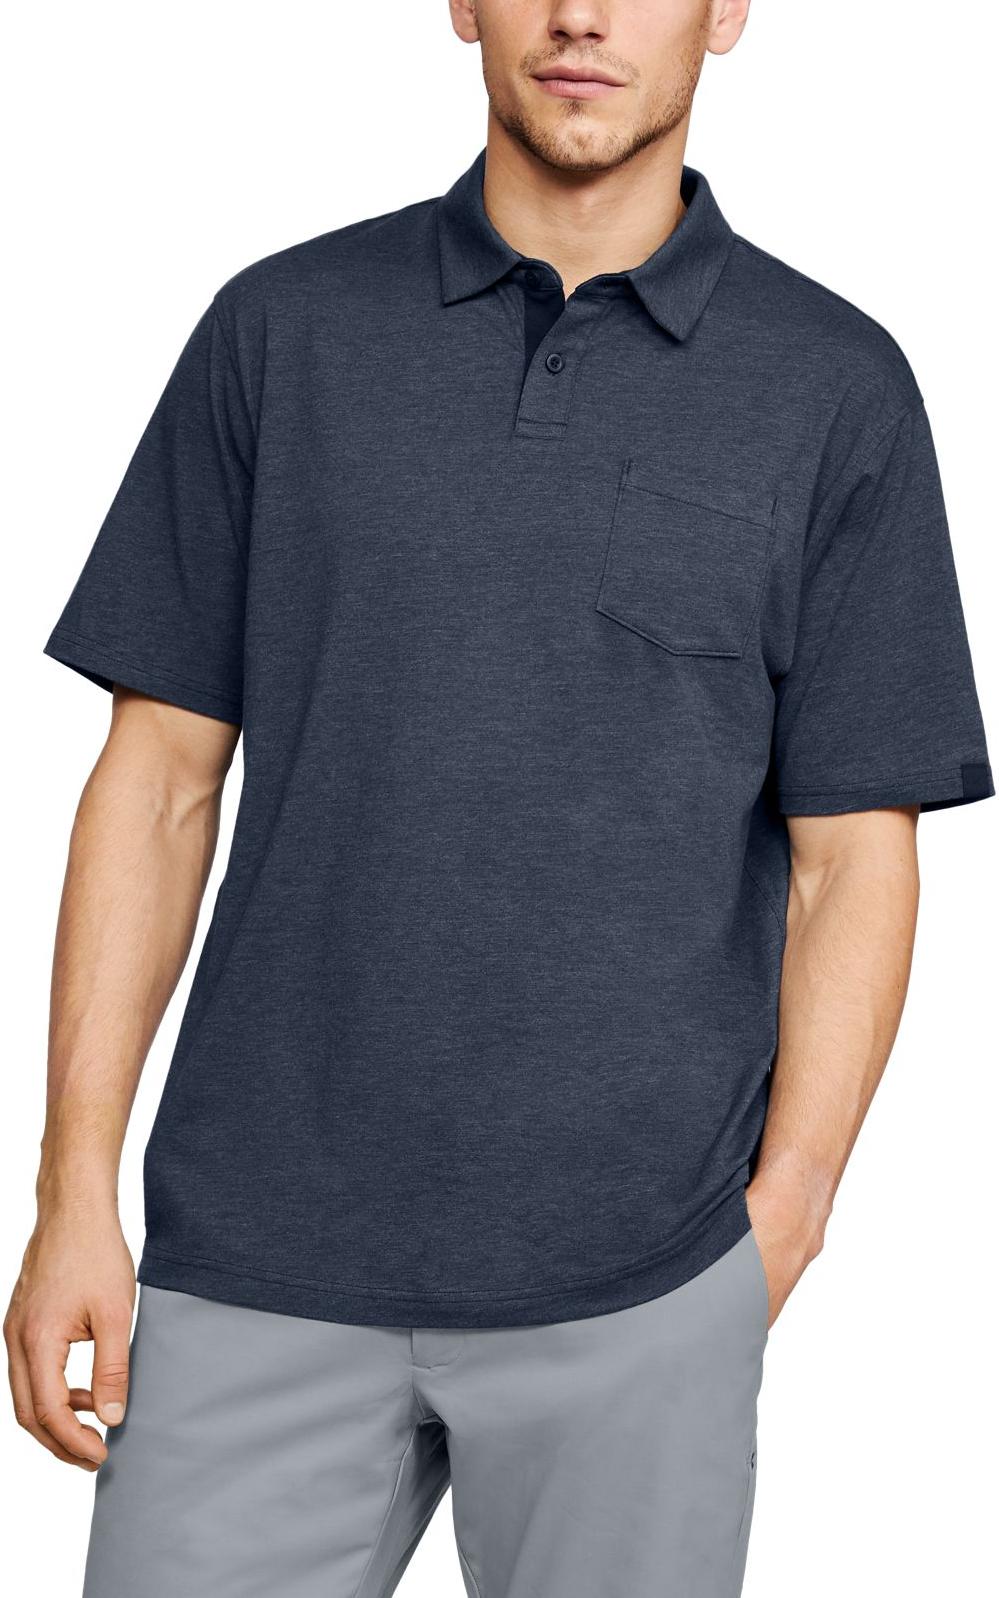 Camiseta Under Armour Charged Cotton Scramble Polo